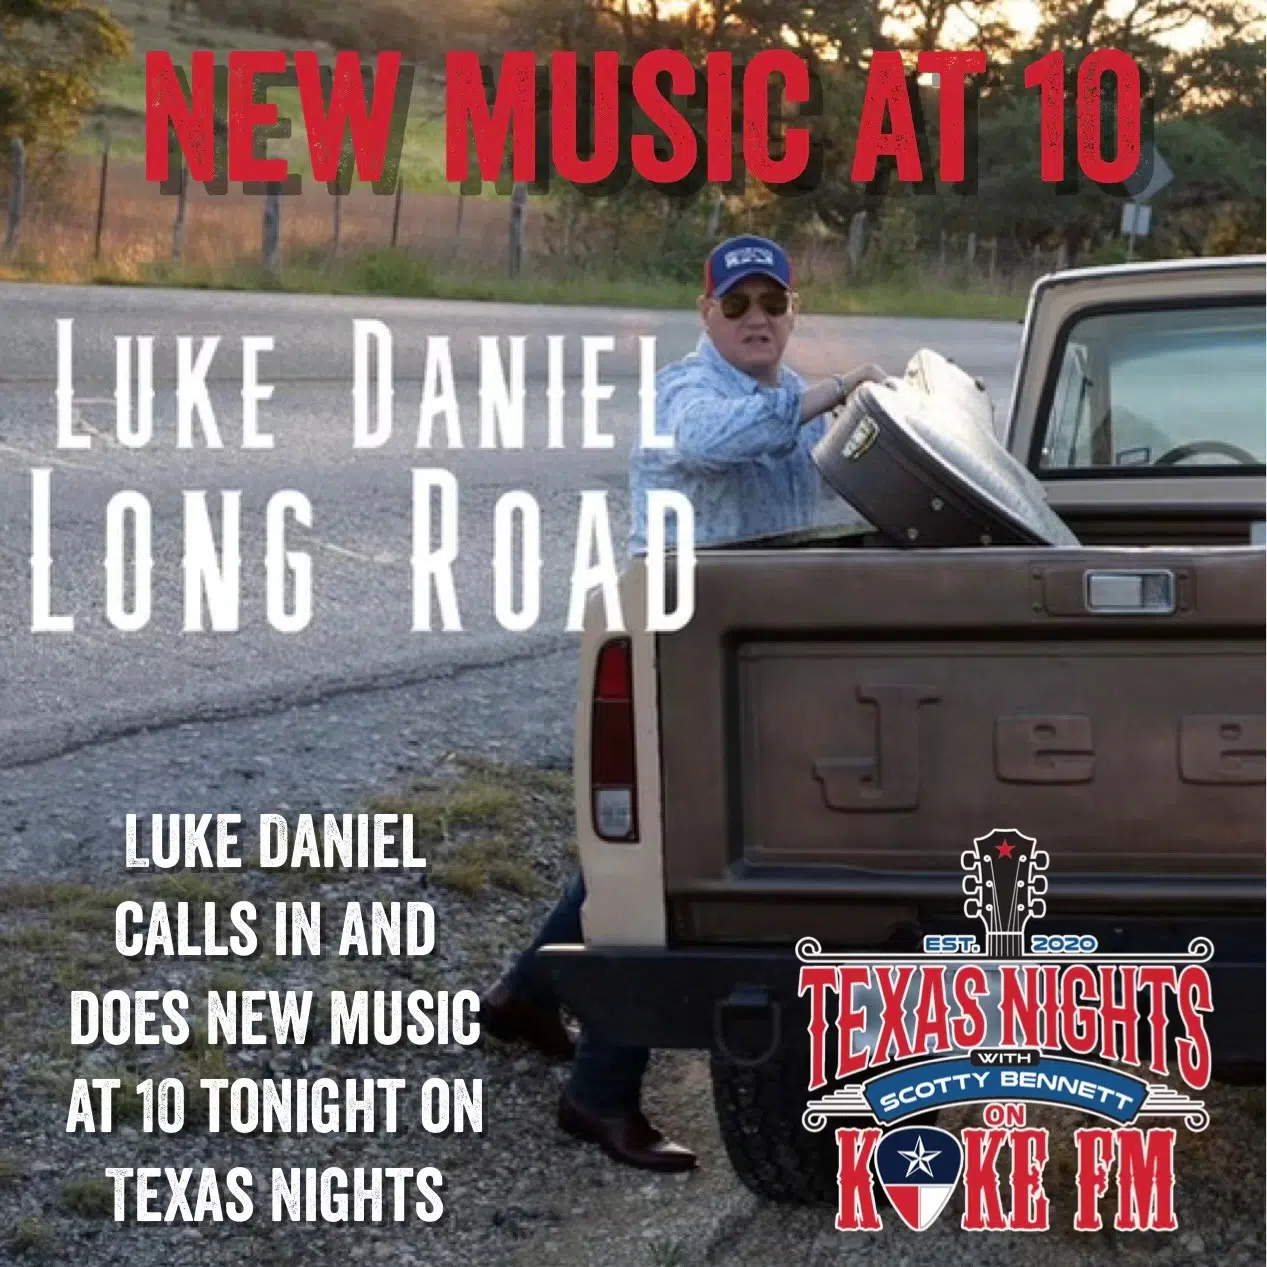 LISTEN: Luke Daniel on Texas Nights with Scotty Bennett 7/27/22